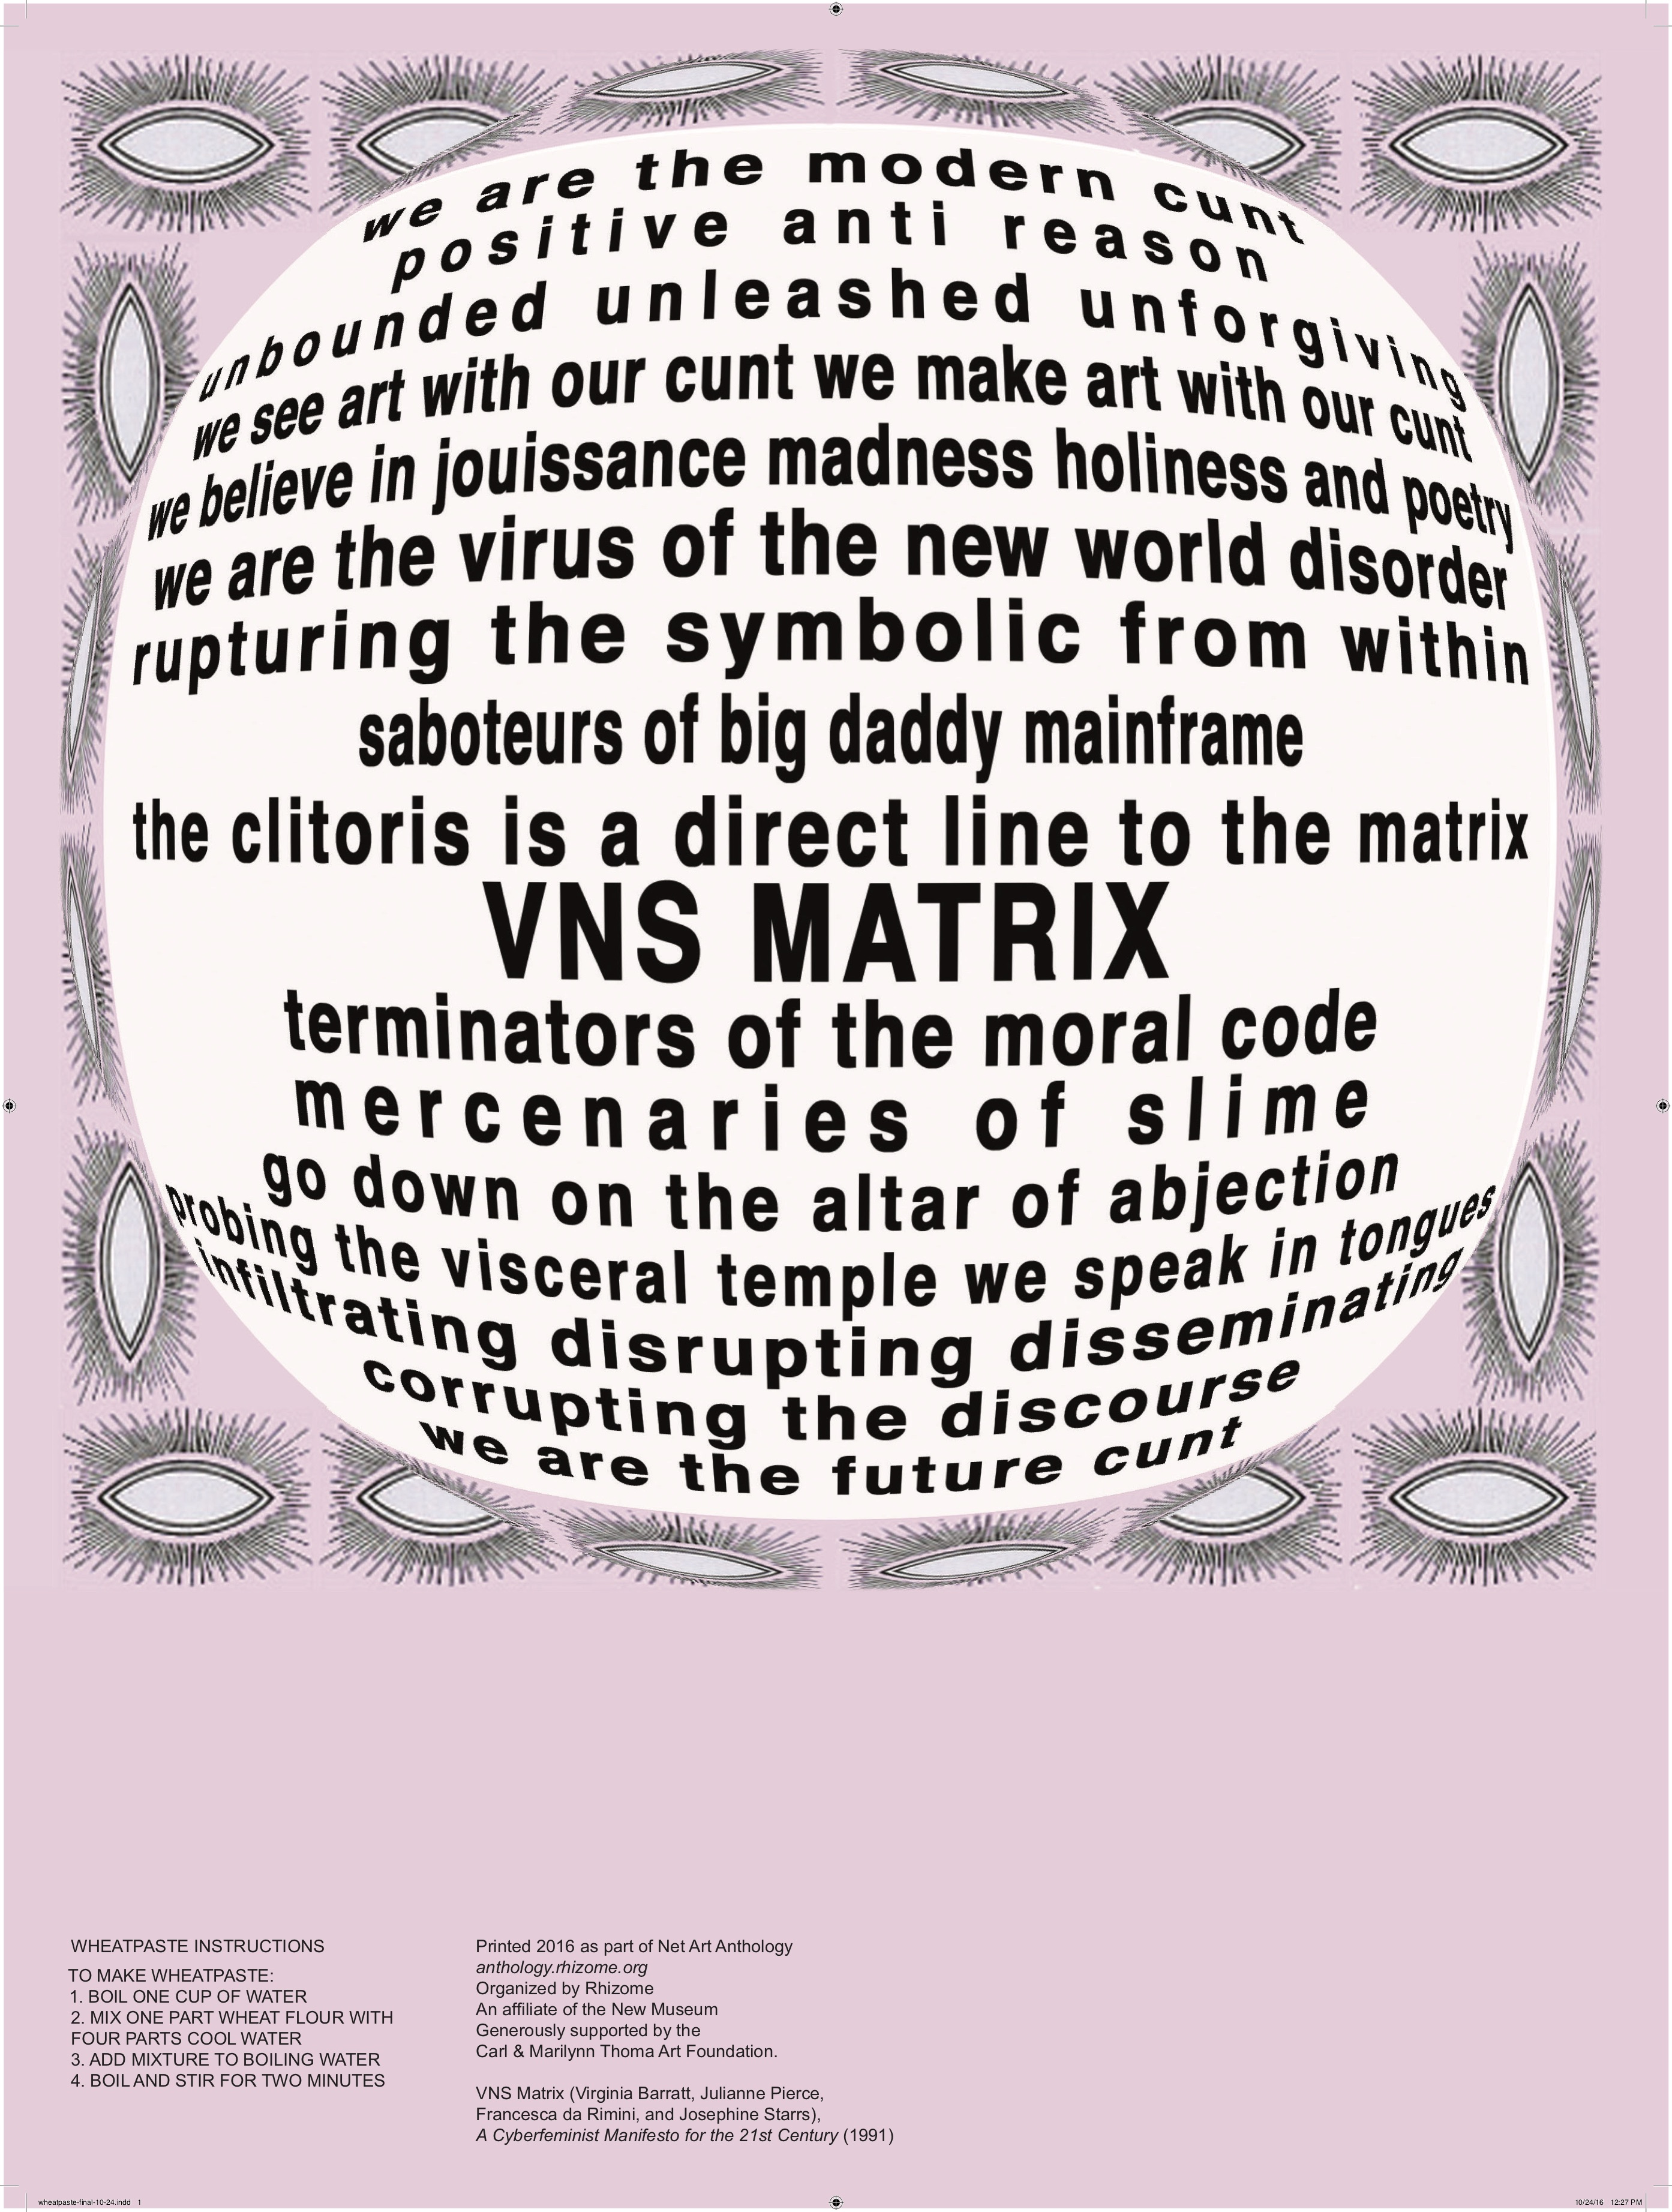 A Cyberfeminist Manifesto for the 21st Century, Courtesy of VNS Matrix